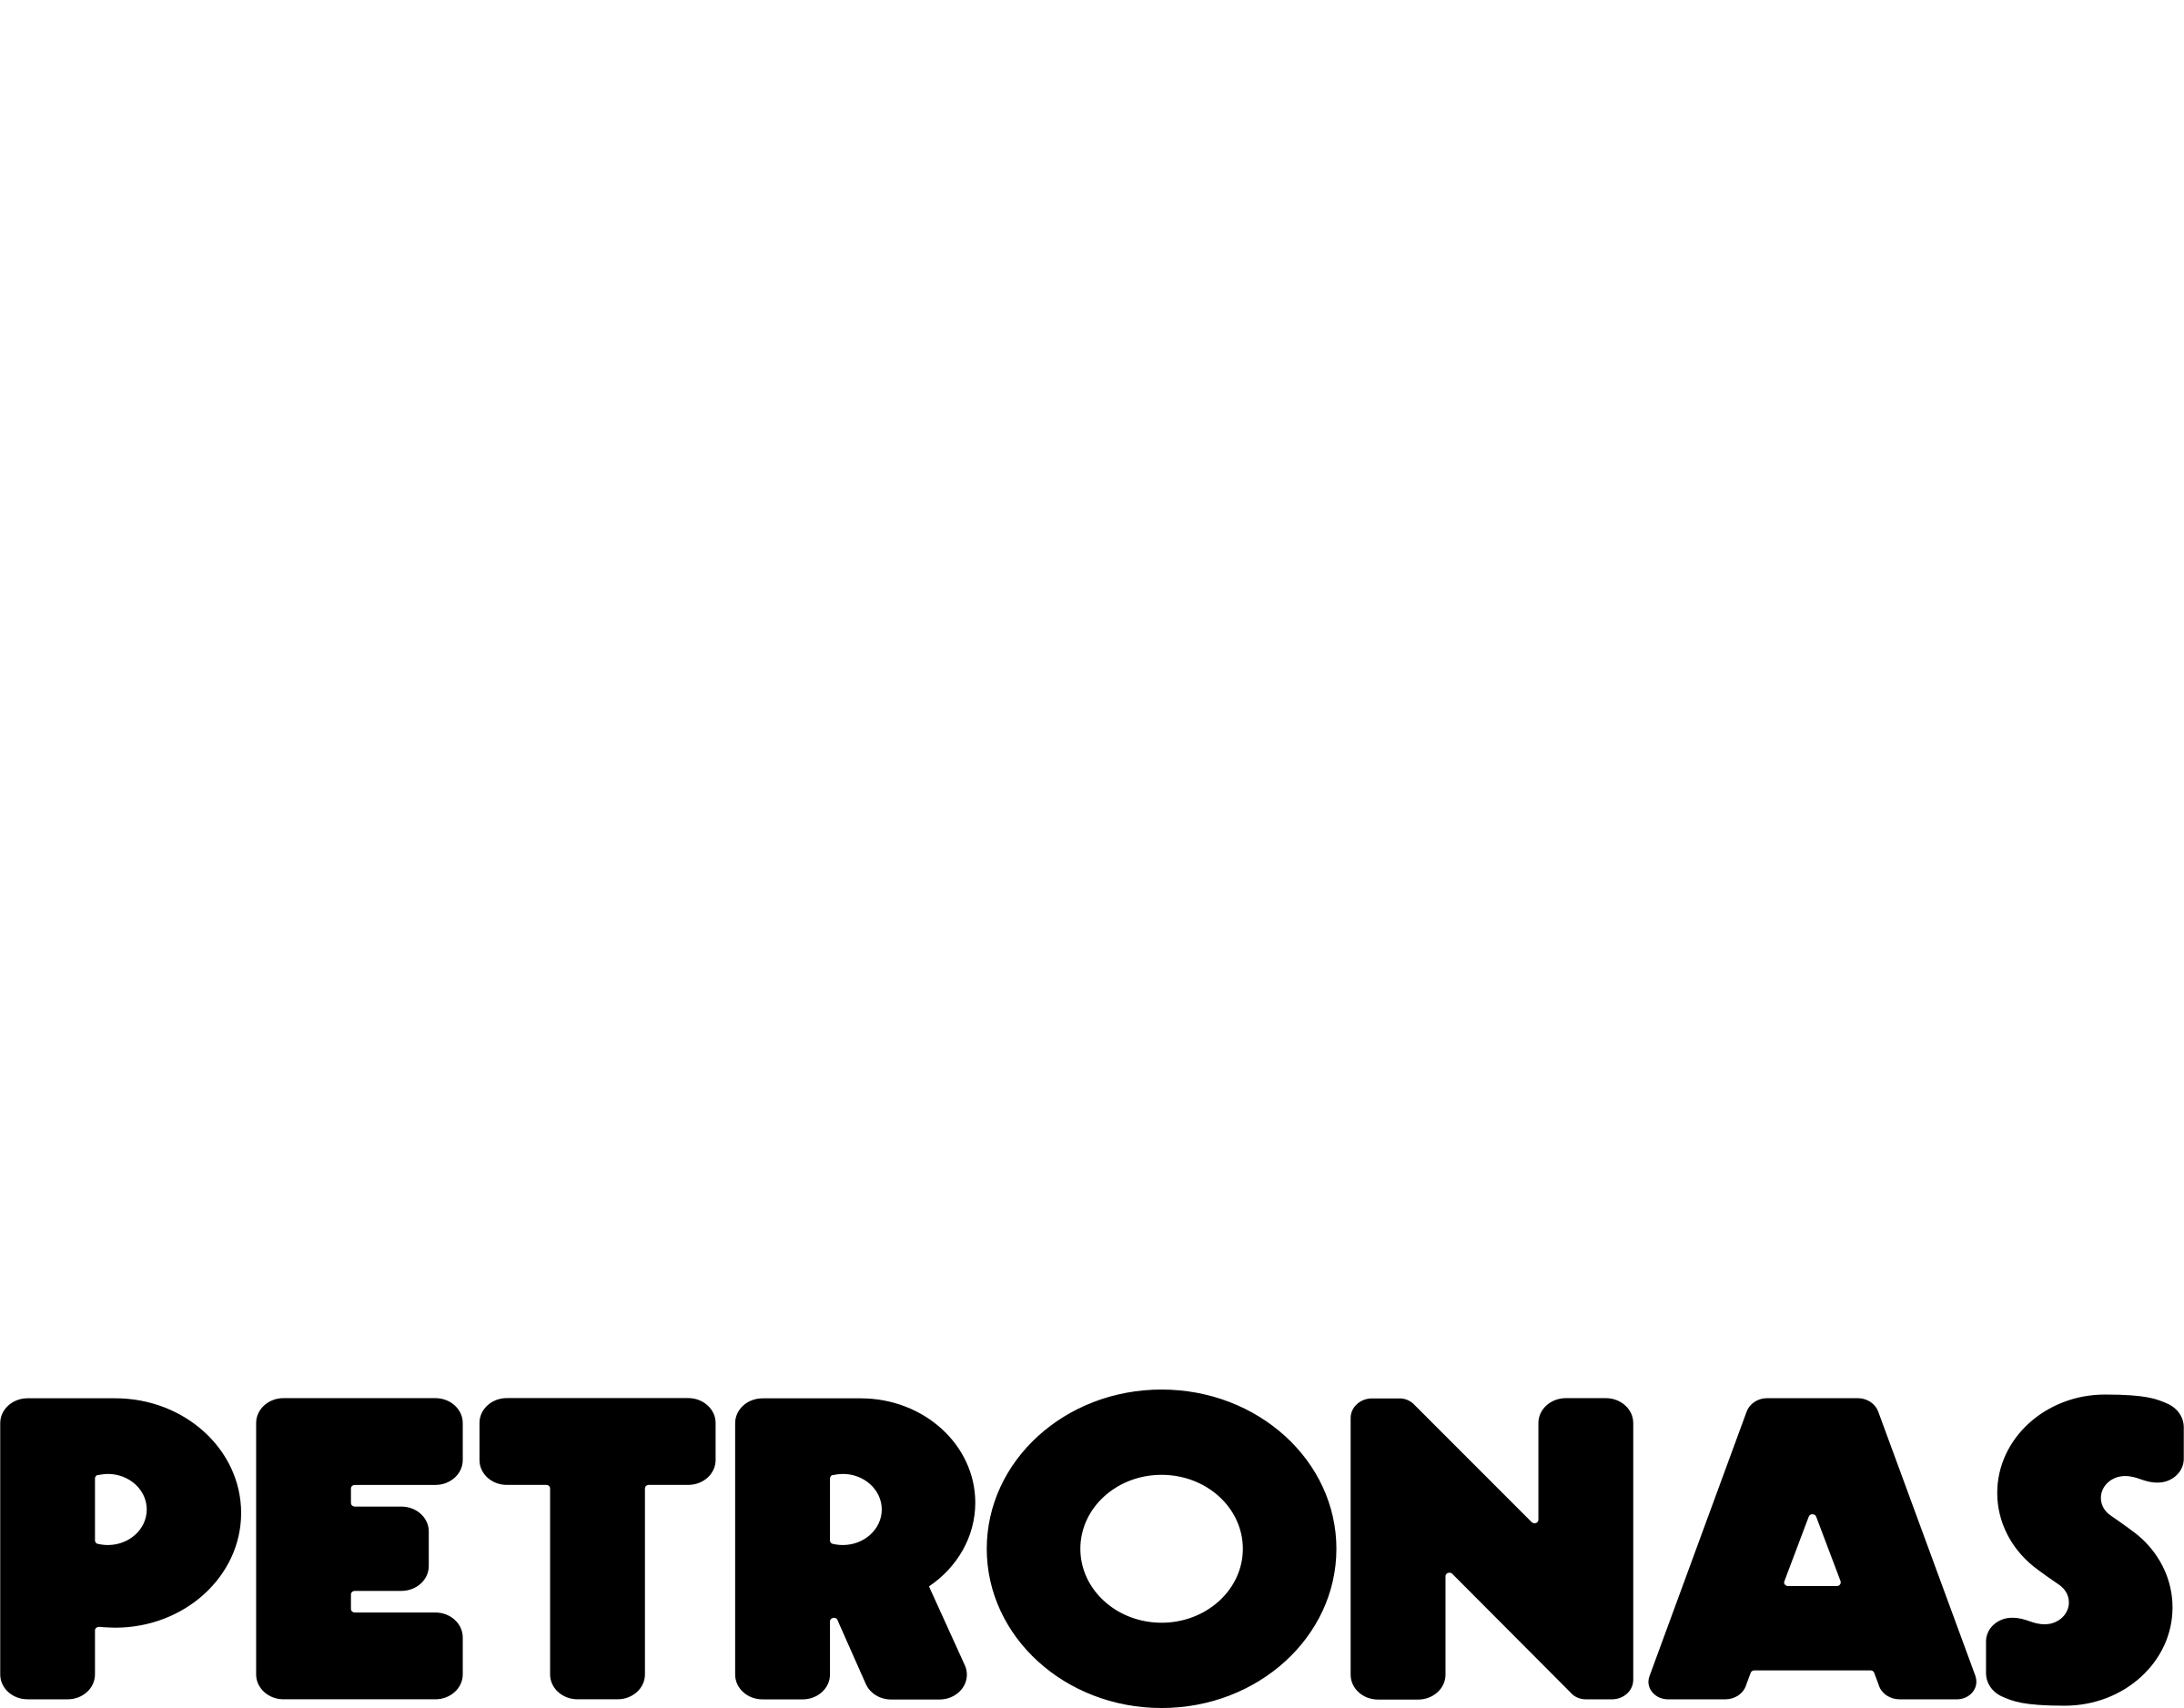 Petronas Logo - LogoDix